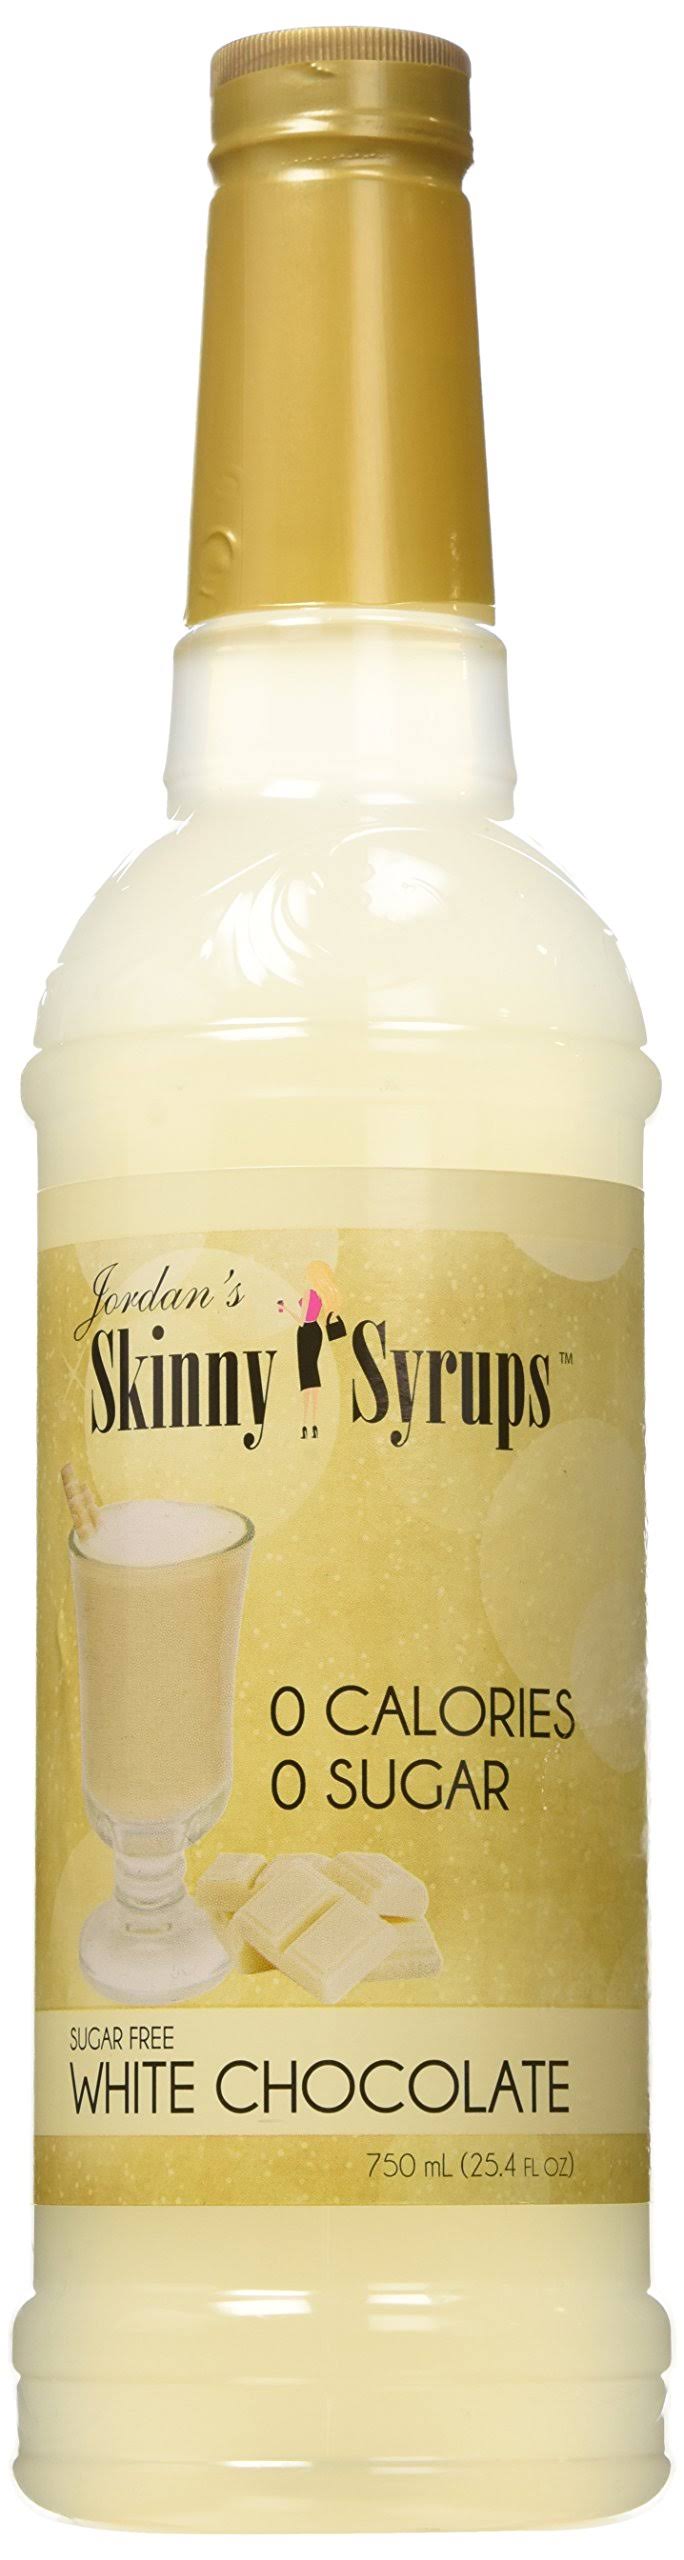 Jordan's Skinny Syrups - Sugar Free Syrup, White Chocolate - 750 ml.